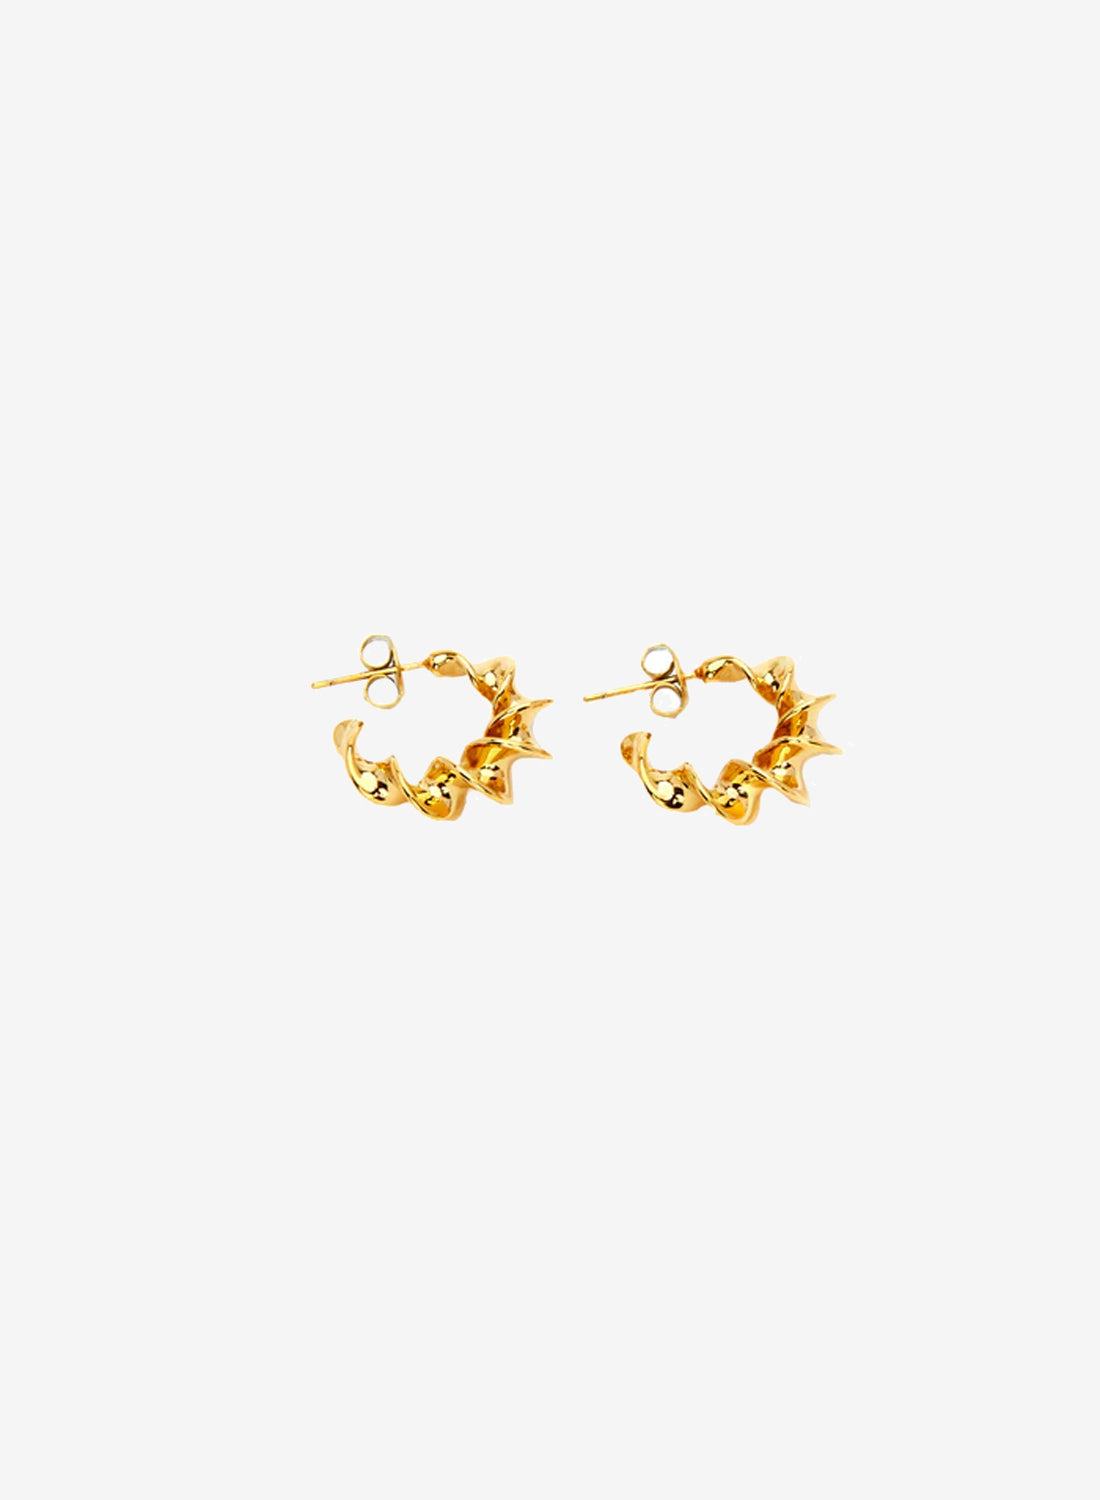 Nine Small Spiral Earrings